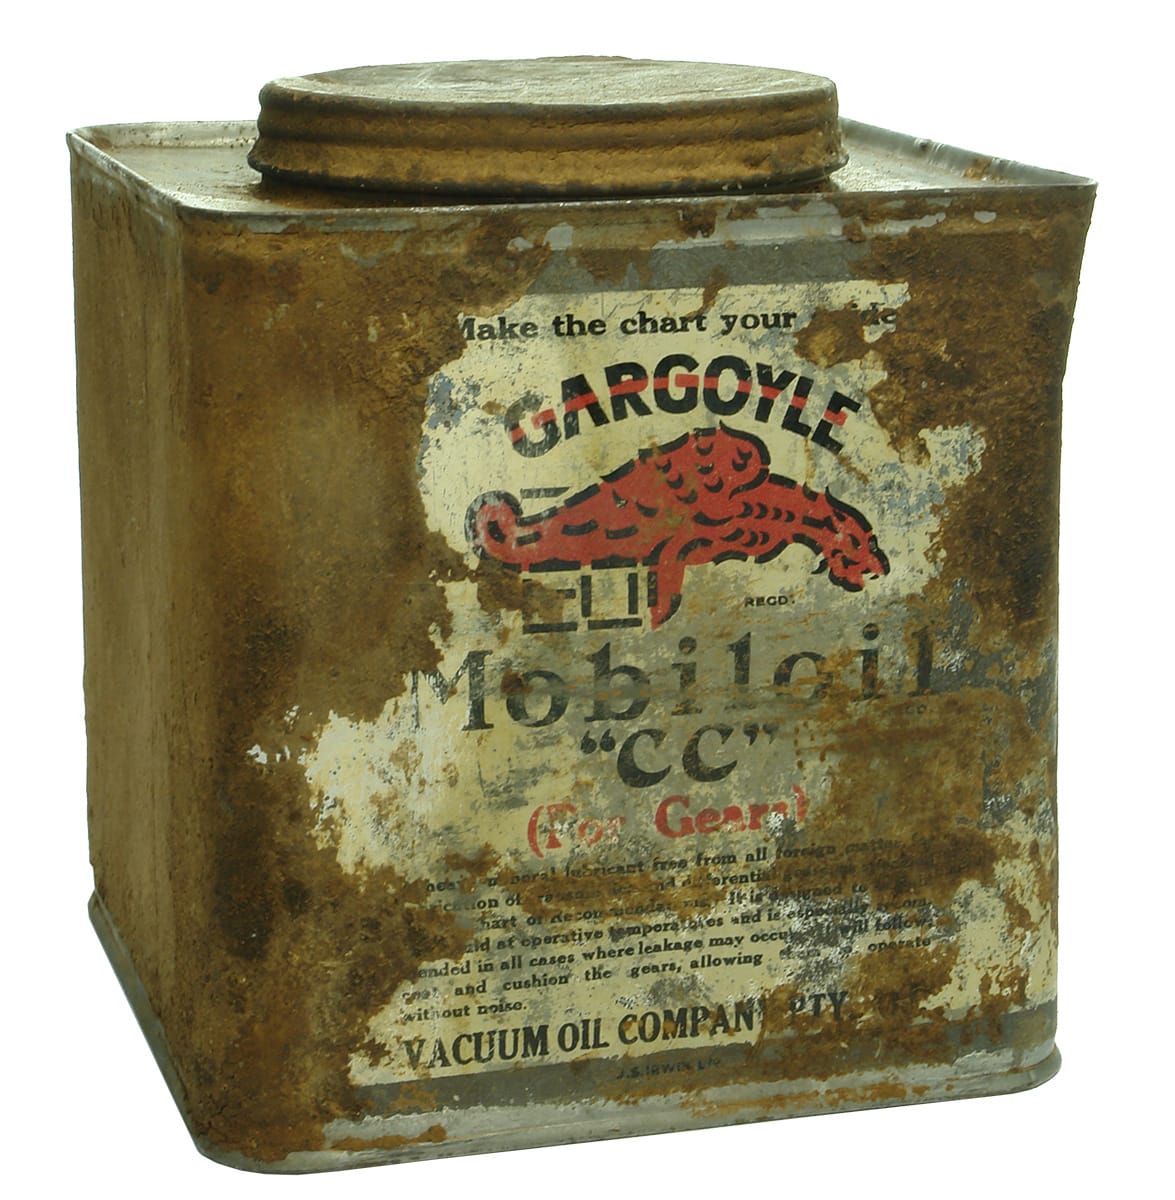 Gargoyle Mobiloil Vacuum Oil Company Tin